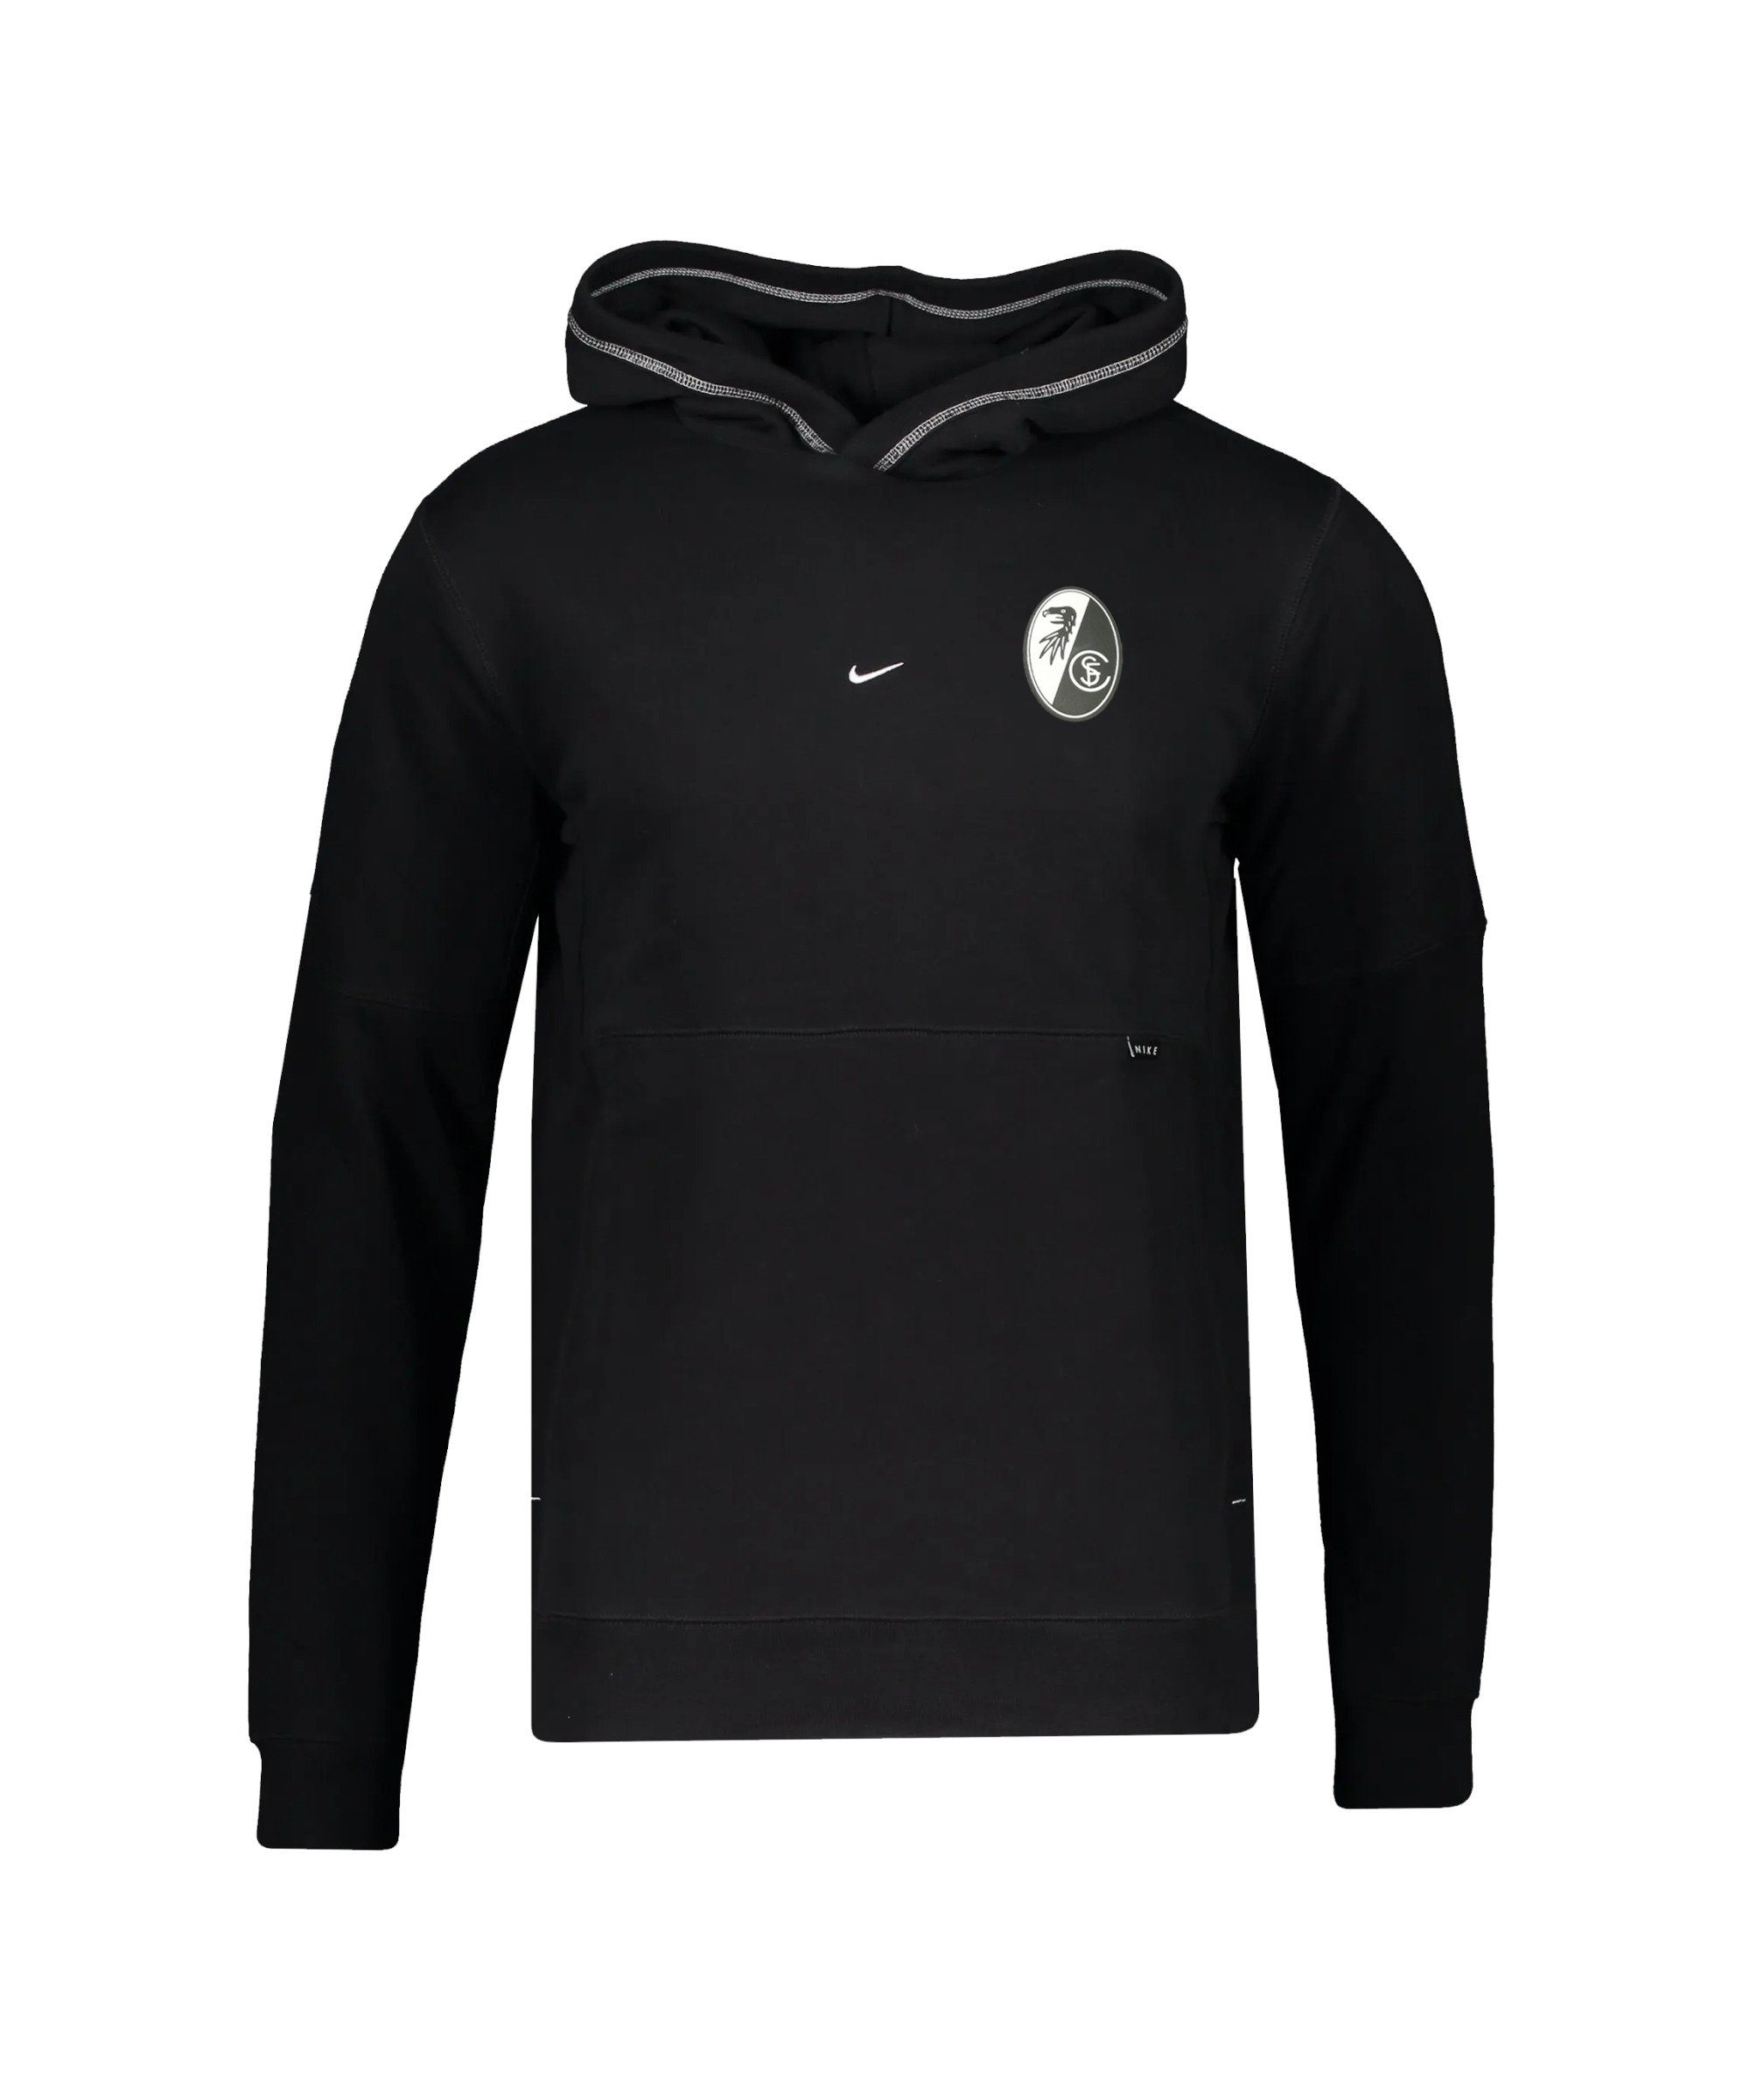 Freiburg SC Nike Hoody Sweatshirt